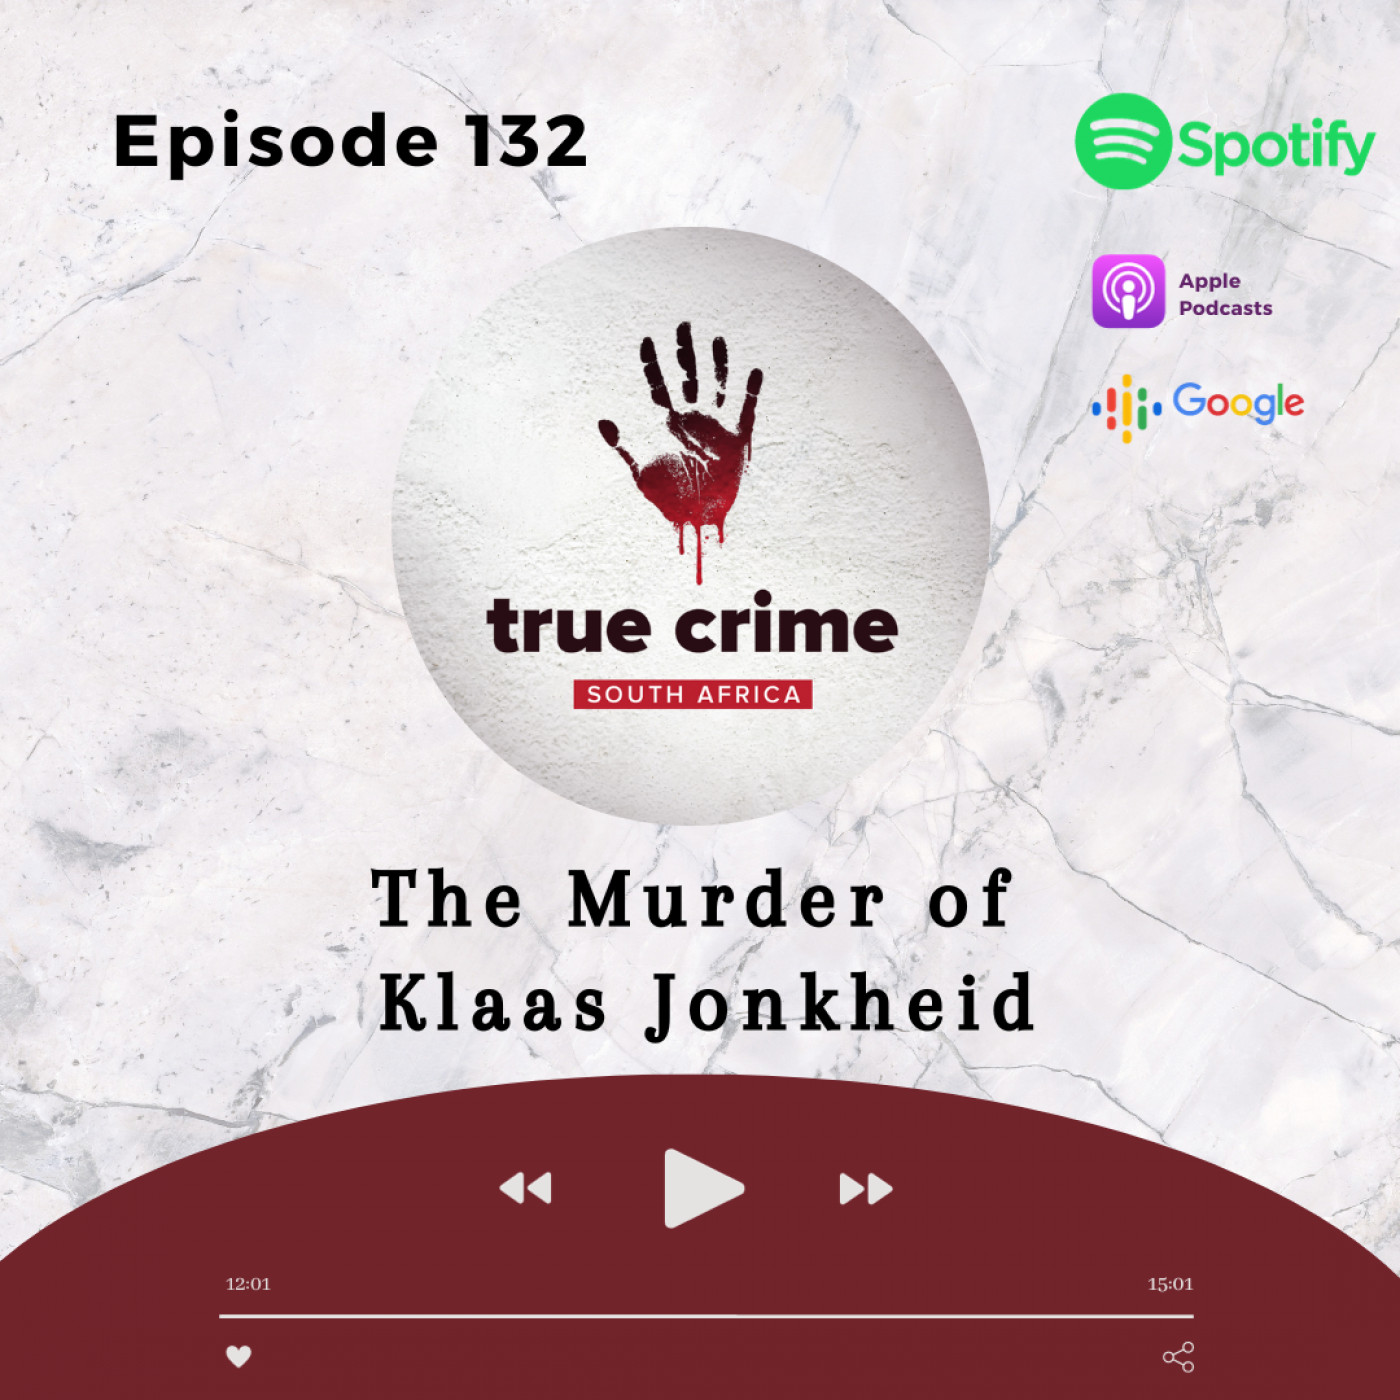 Episode 132 The Murder of Klaas Jonkheid